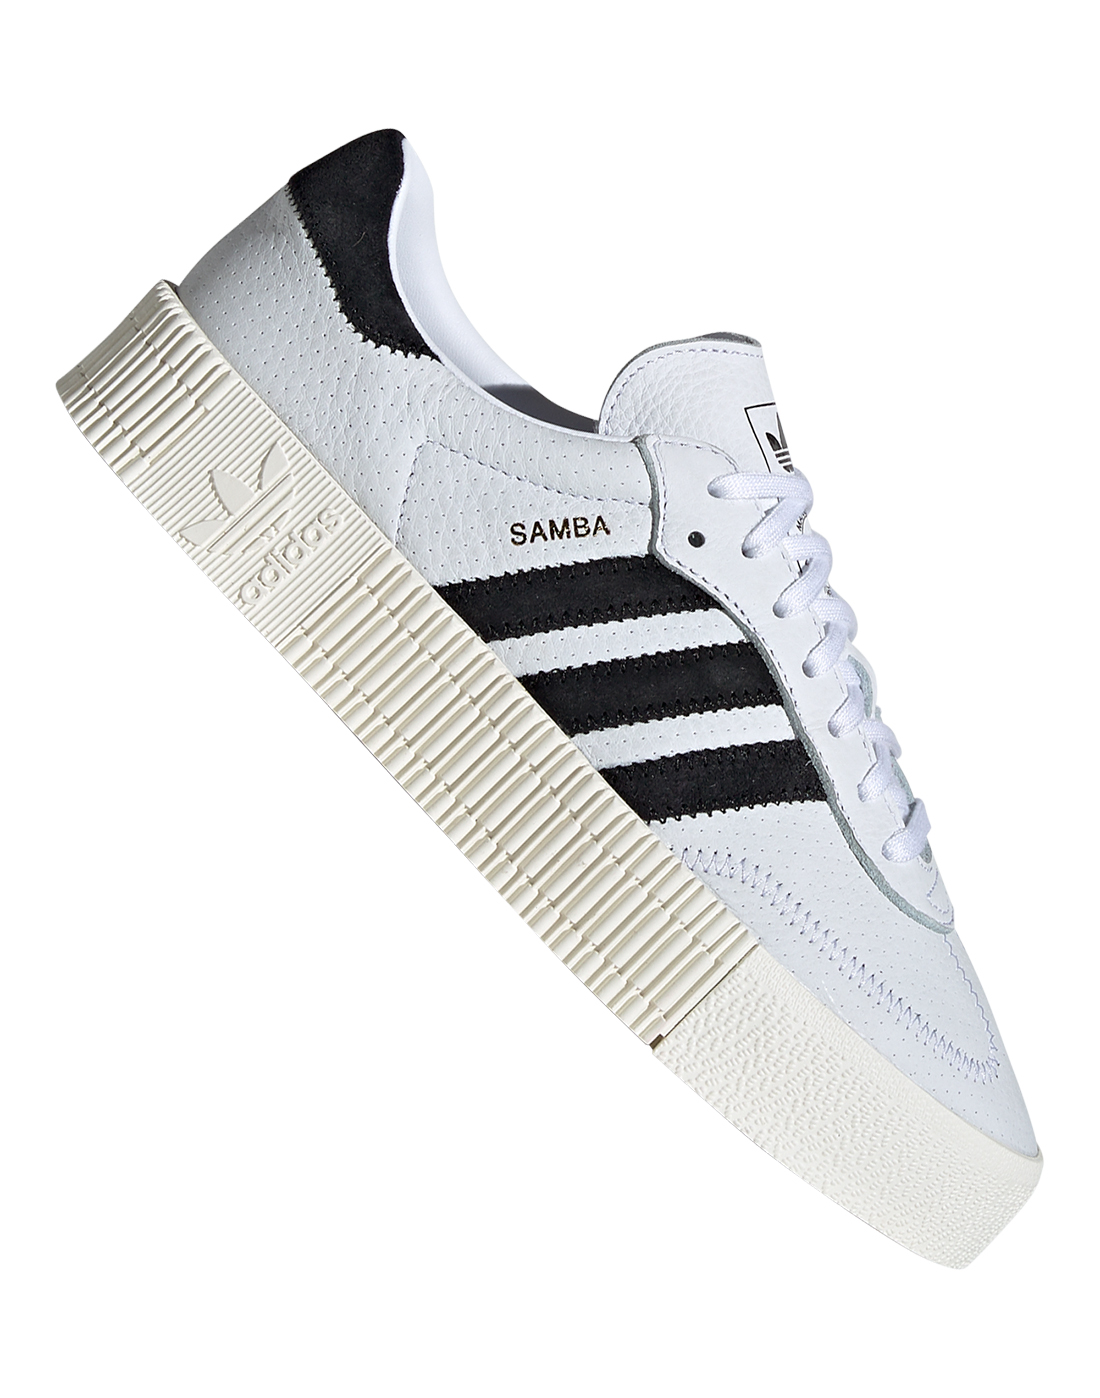 Adidas samba белые. Adidas Samba White. Adidas Originals Samba Rose. Адидас Самба с белой подошвой.